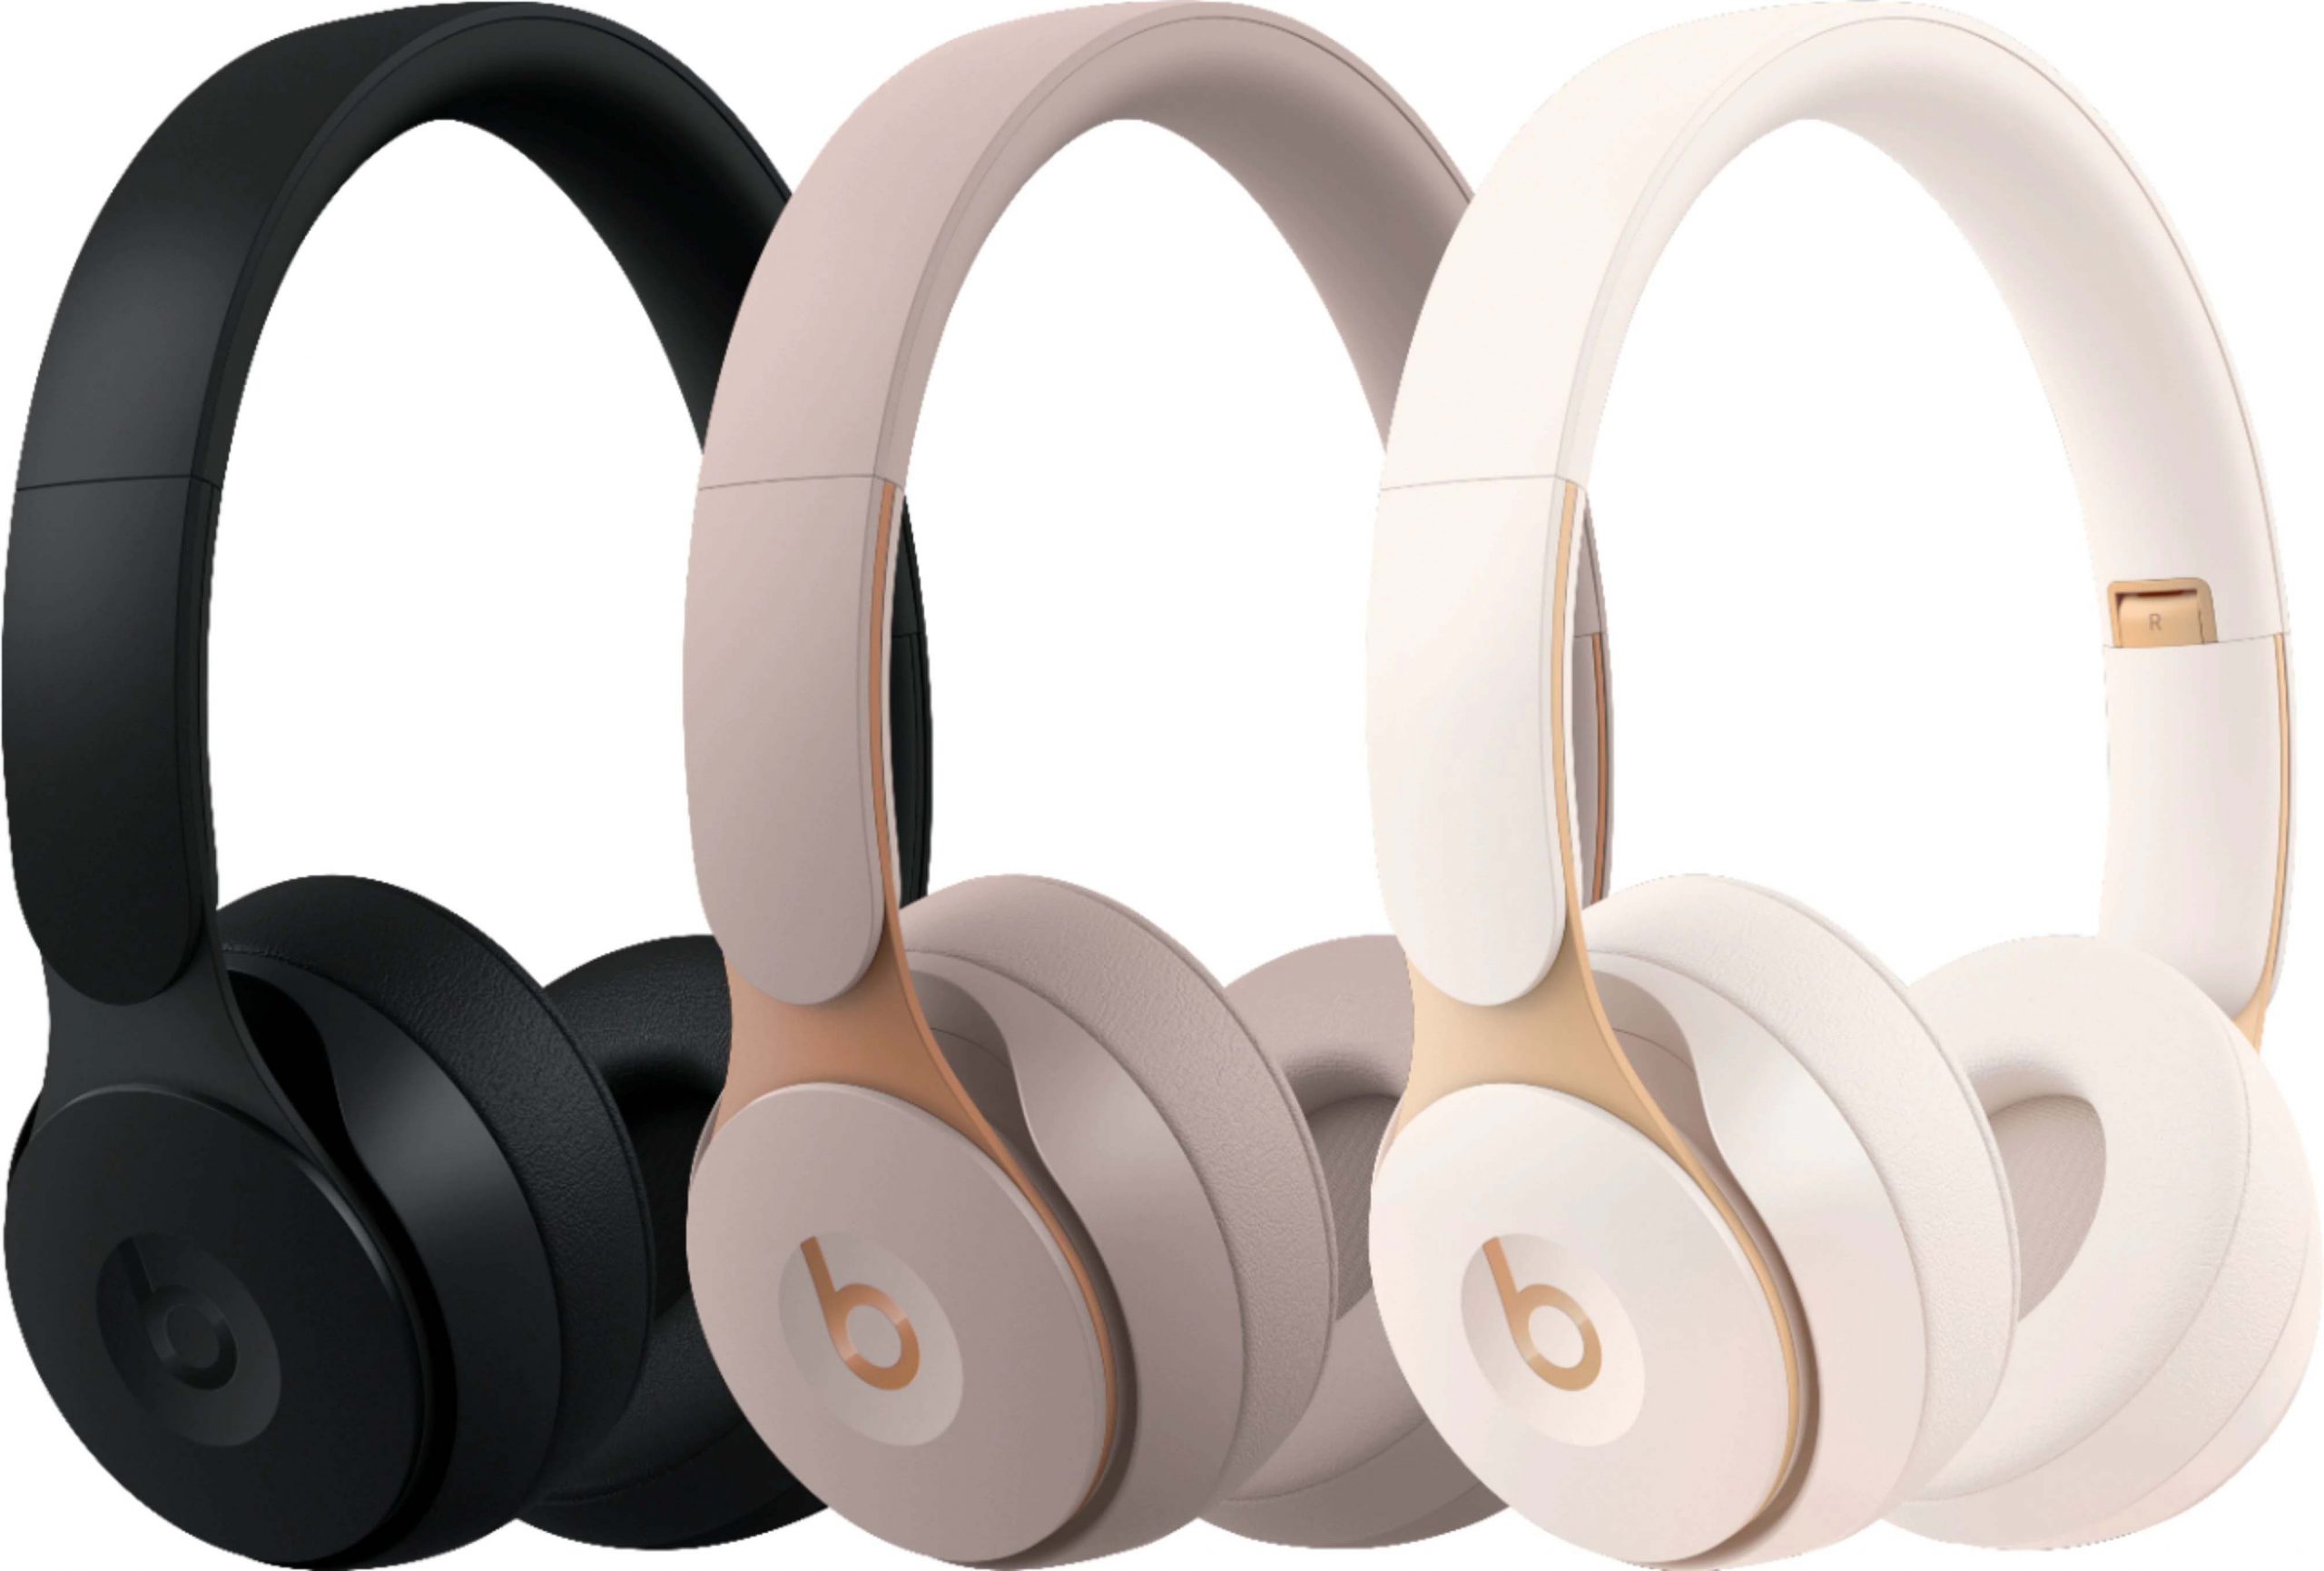 Beats by Dr. Dre - Solo Pro Wireless Noise Cancelling On-Ear Headphones - colors Model-MRJ62LLA-A